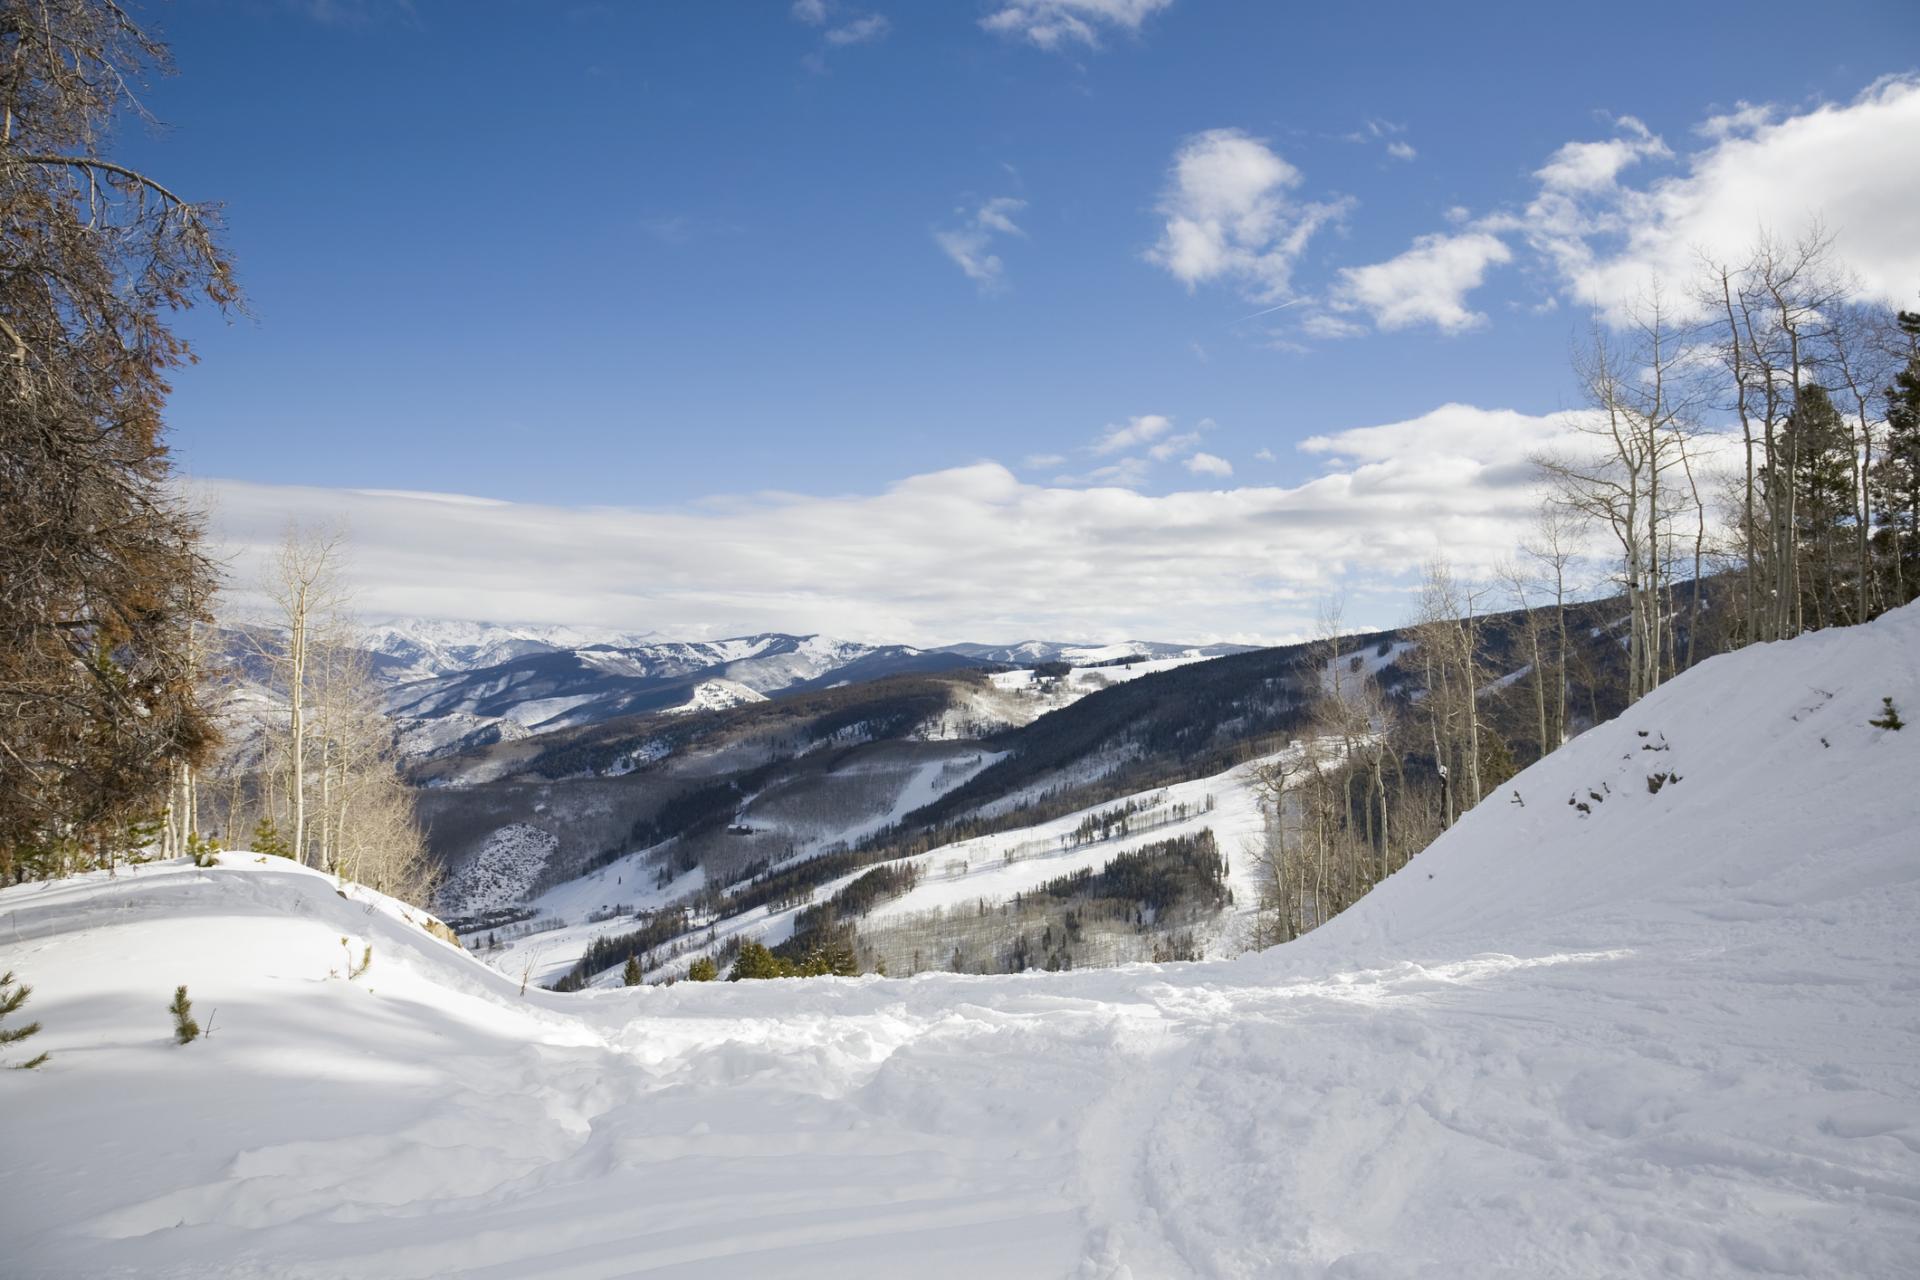 view from Beaver Creek ski resort